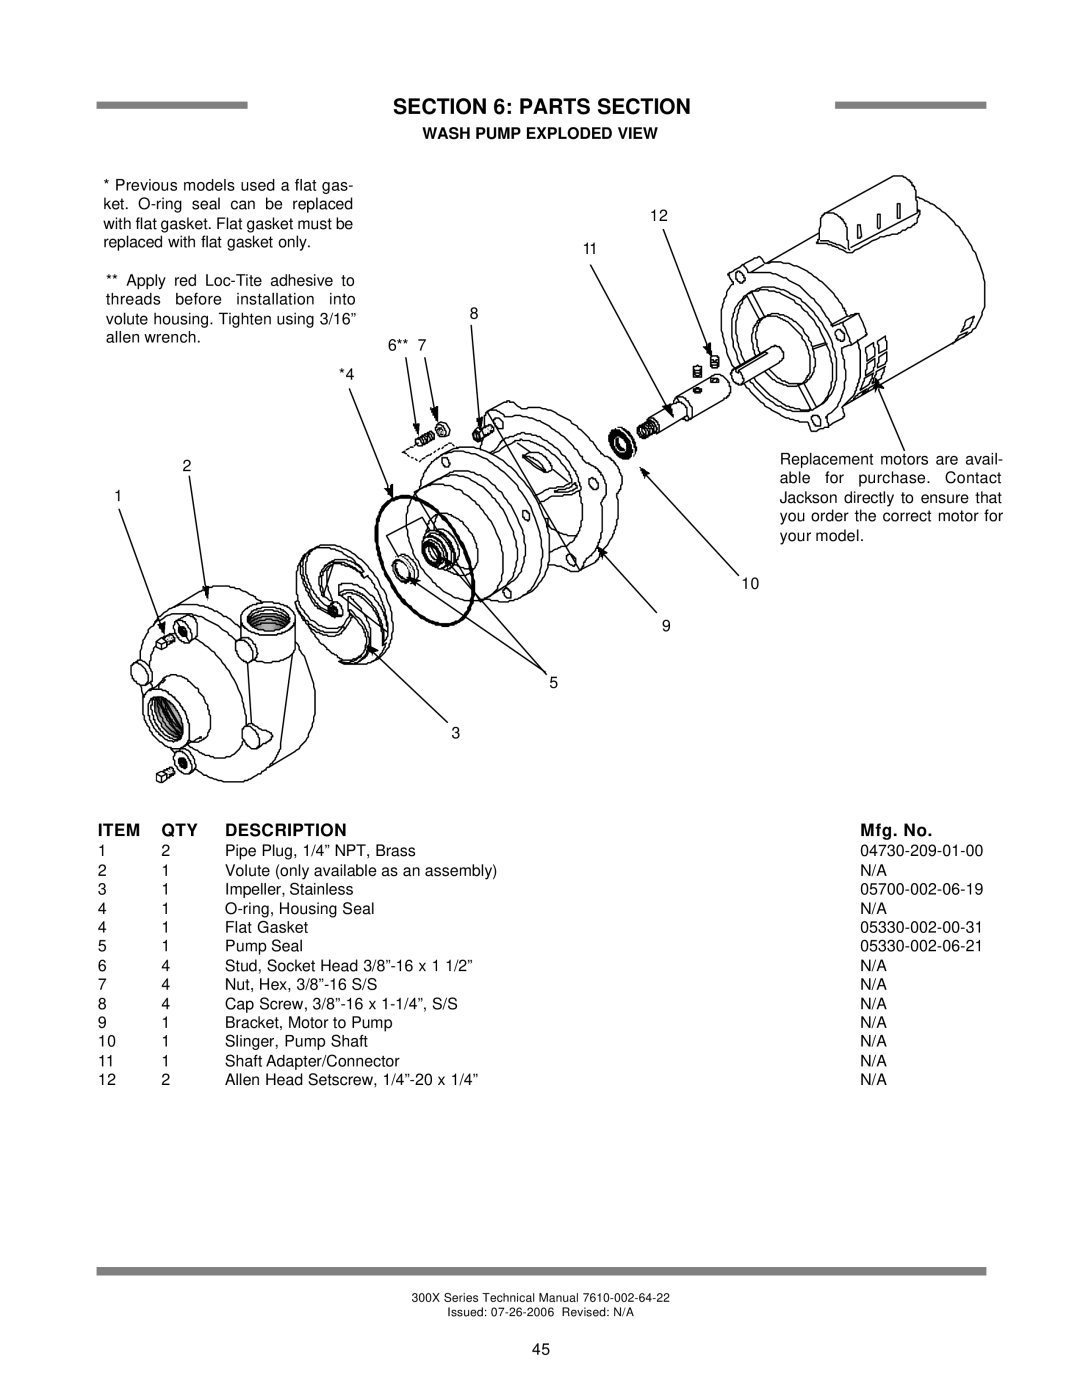 Jackson 300XN, 300XS, 300XLT technical manual Wash Pump Exploded View, Parts Section, Description, Mfg. No 